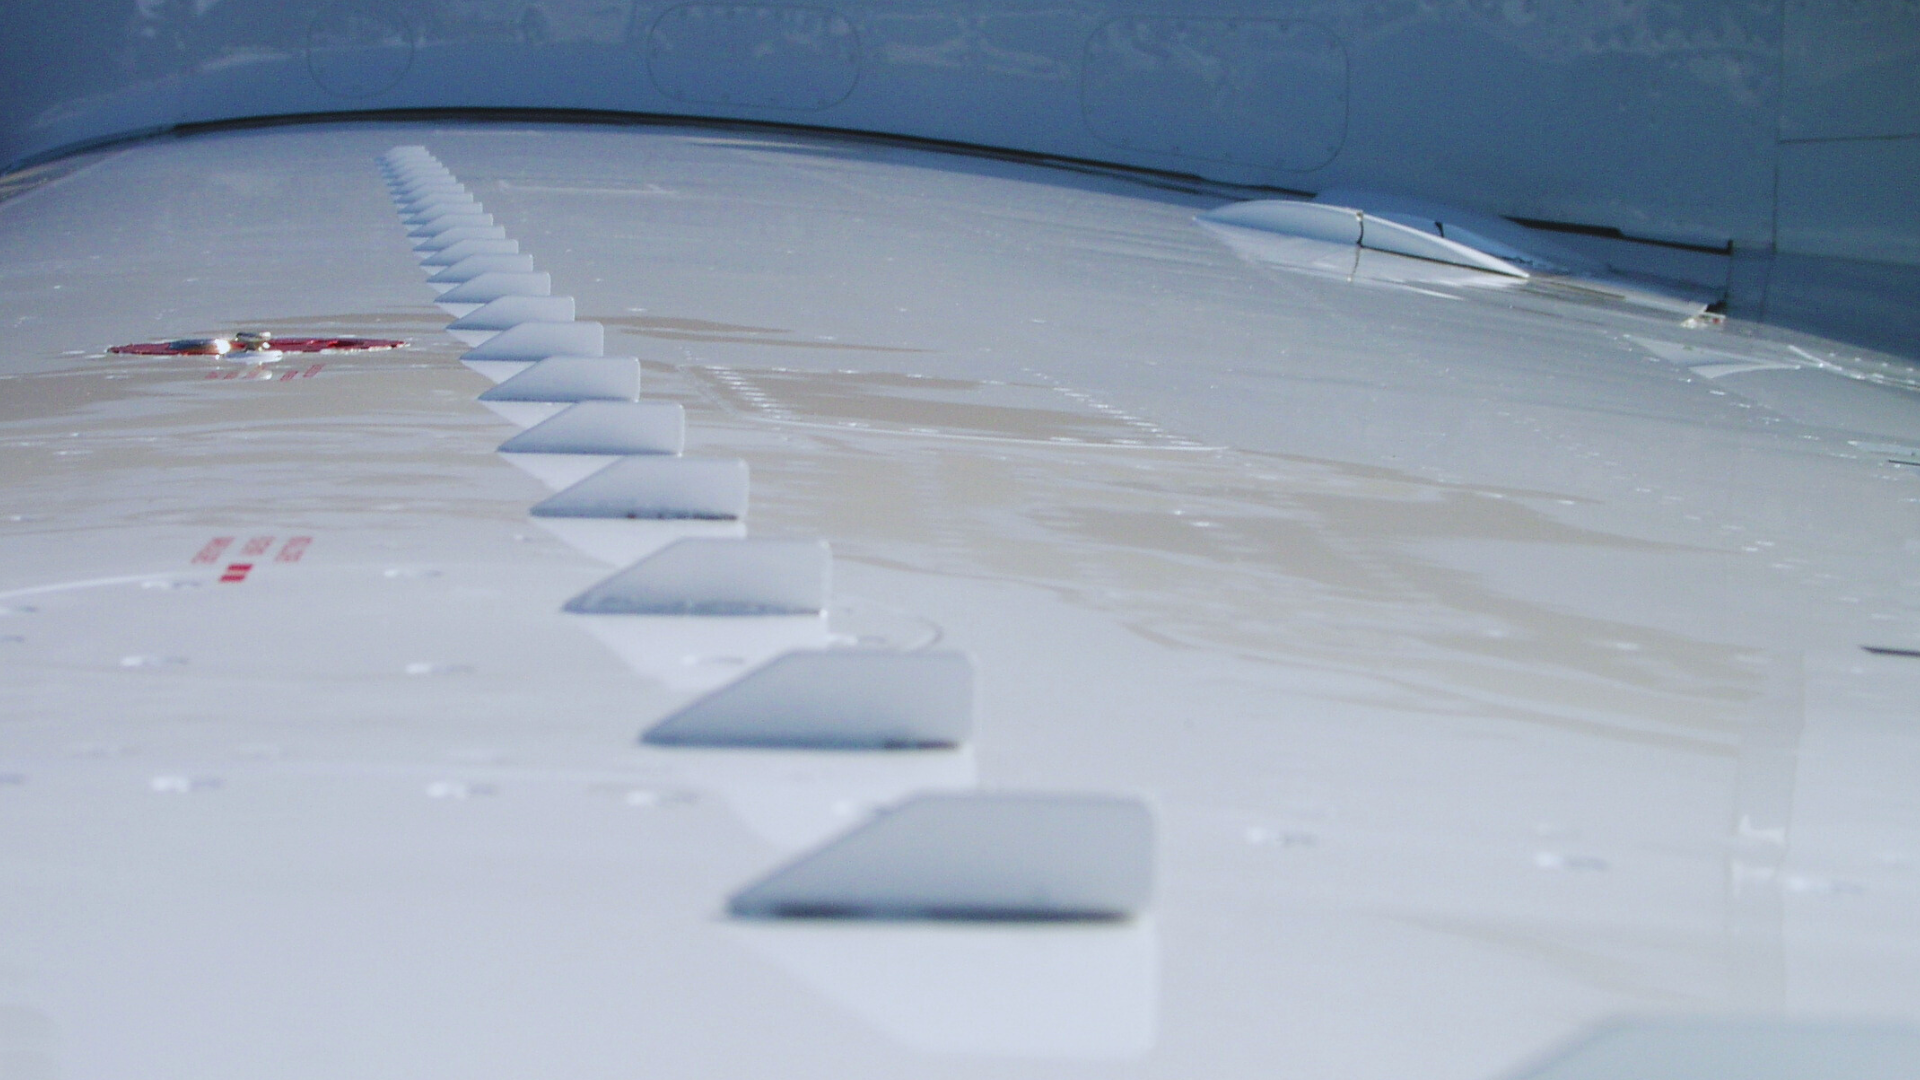 vortex generators on airplane wing